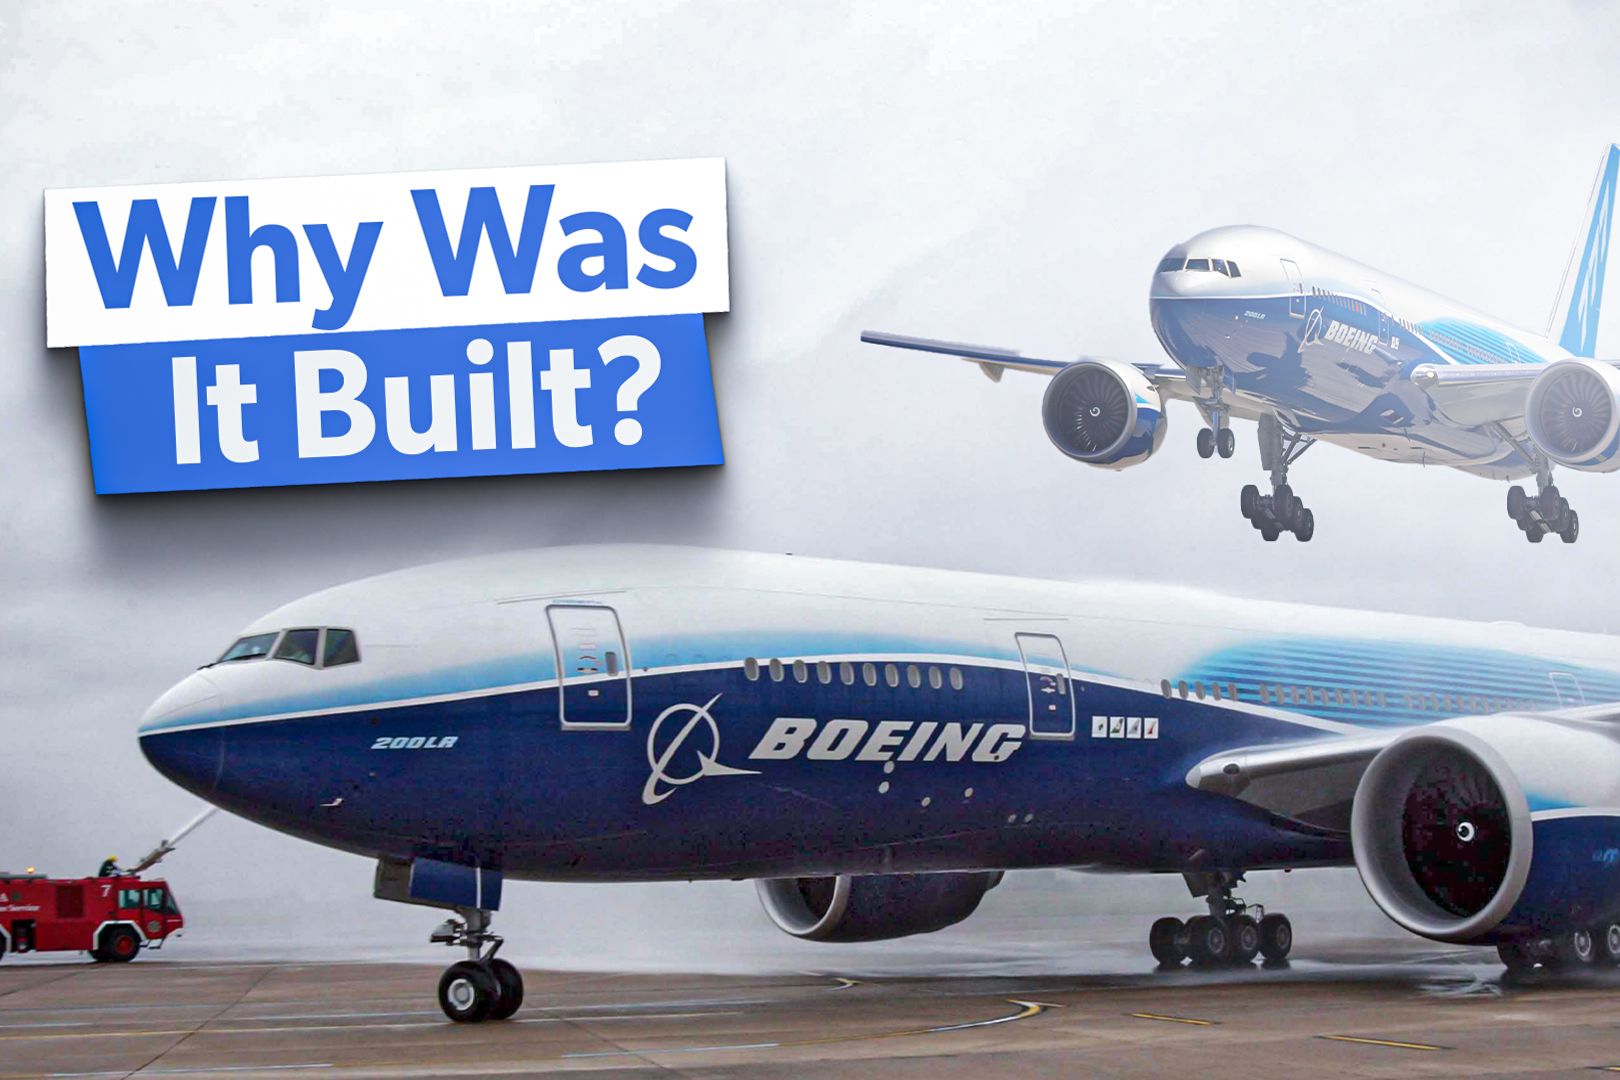 Boeing-777-200LR-construction reasons